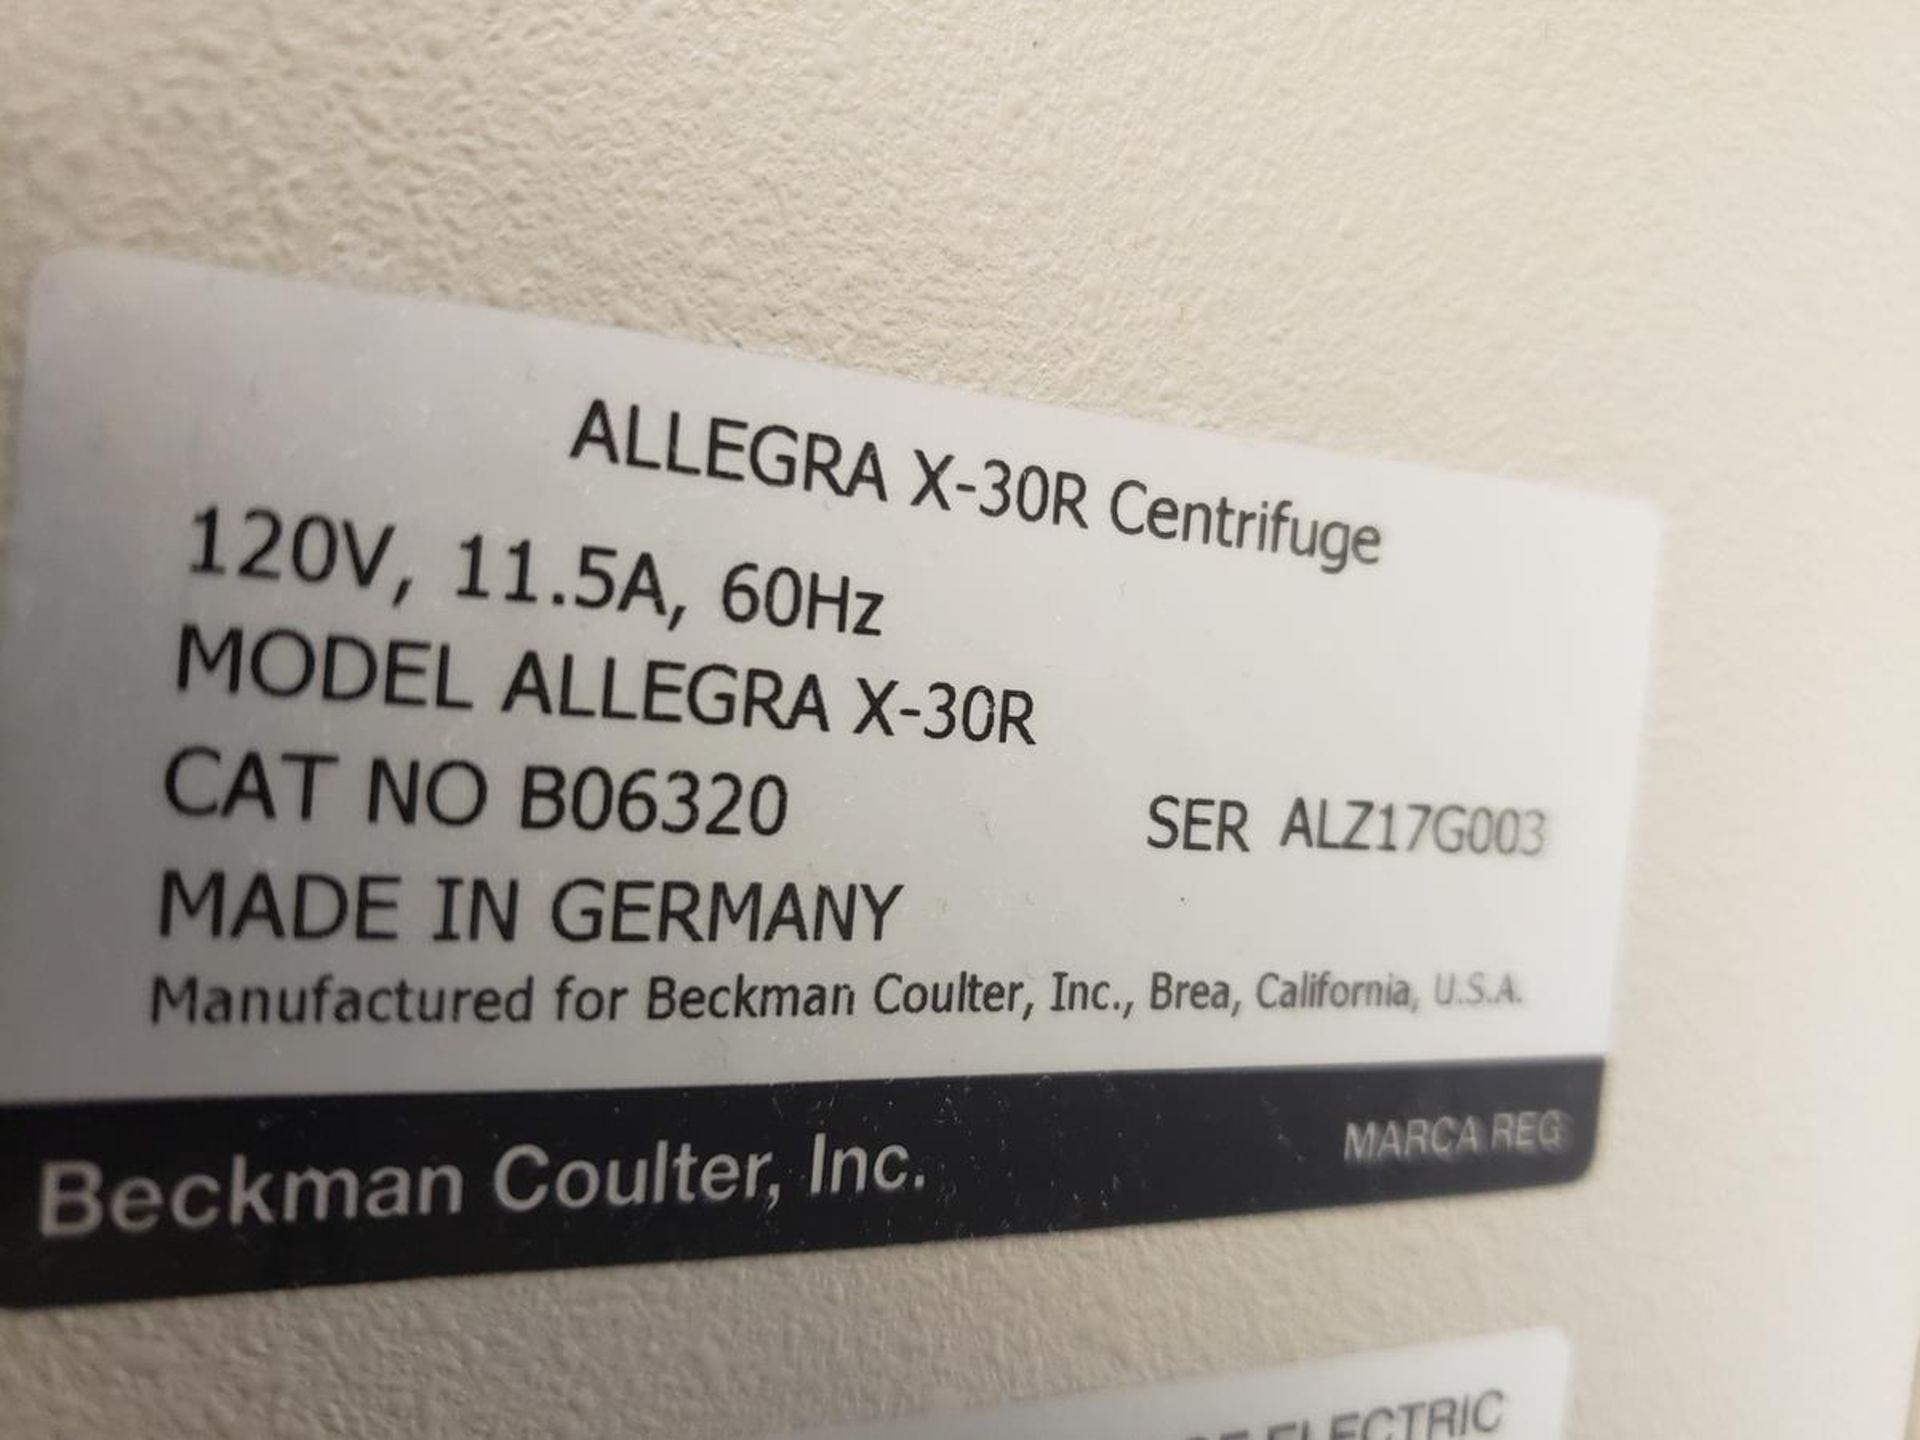 Beckman Coulter Allegra X-30R Centrifuge, S/N ALZ17G003 - Image 2 of 4